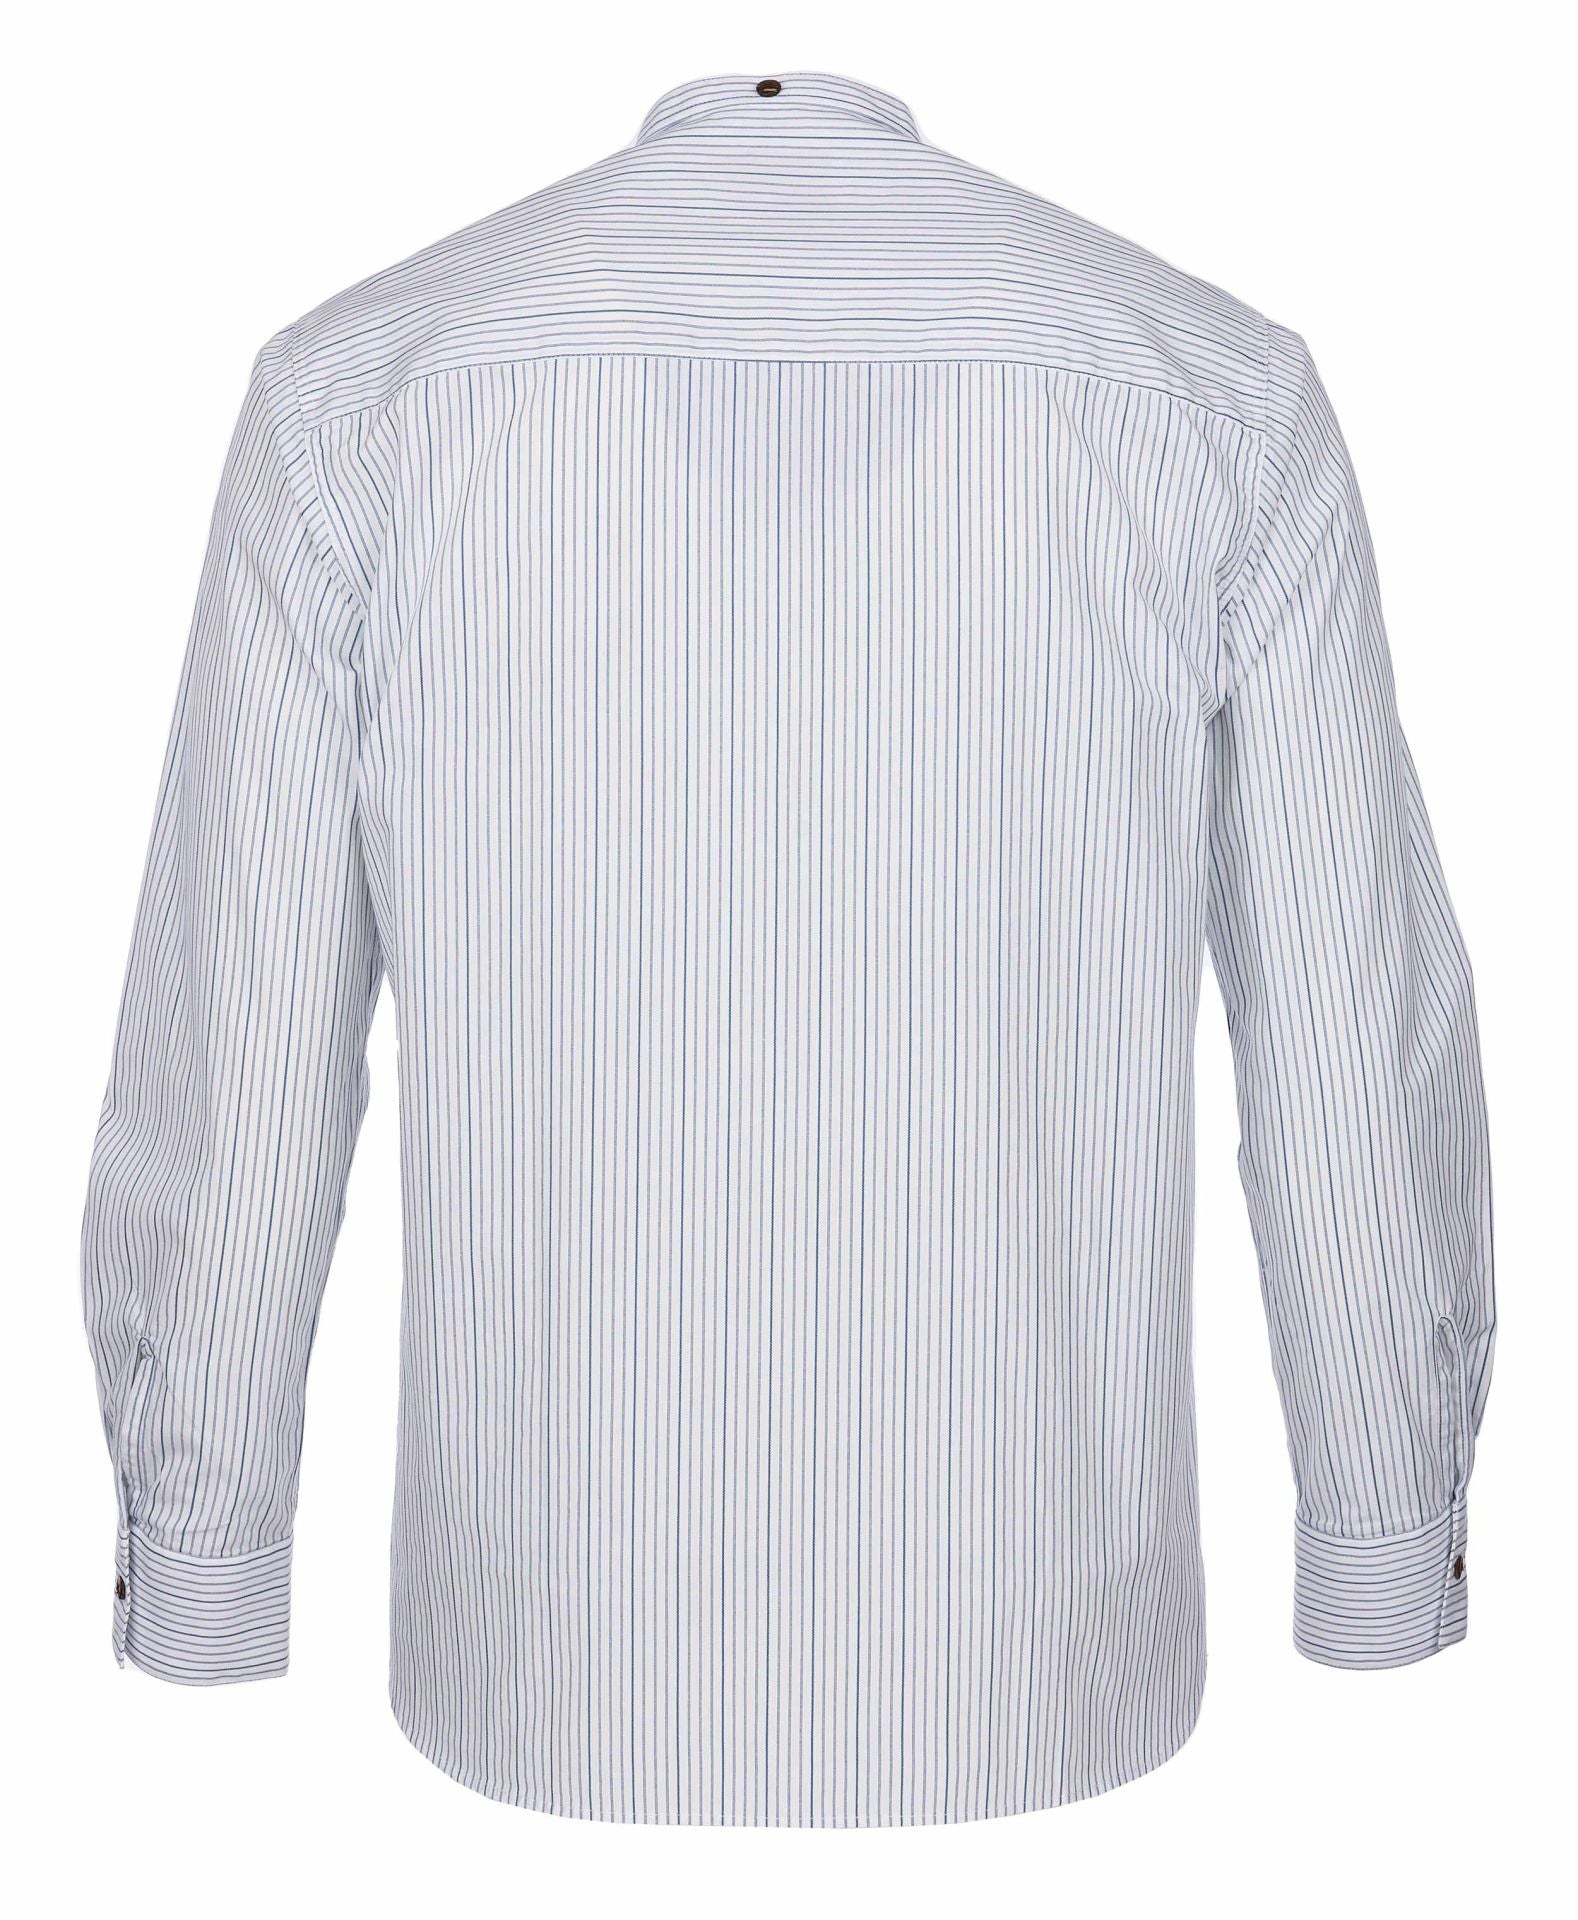 1923 Buccanoy Shirt - waco white